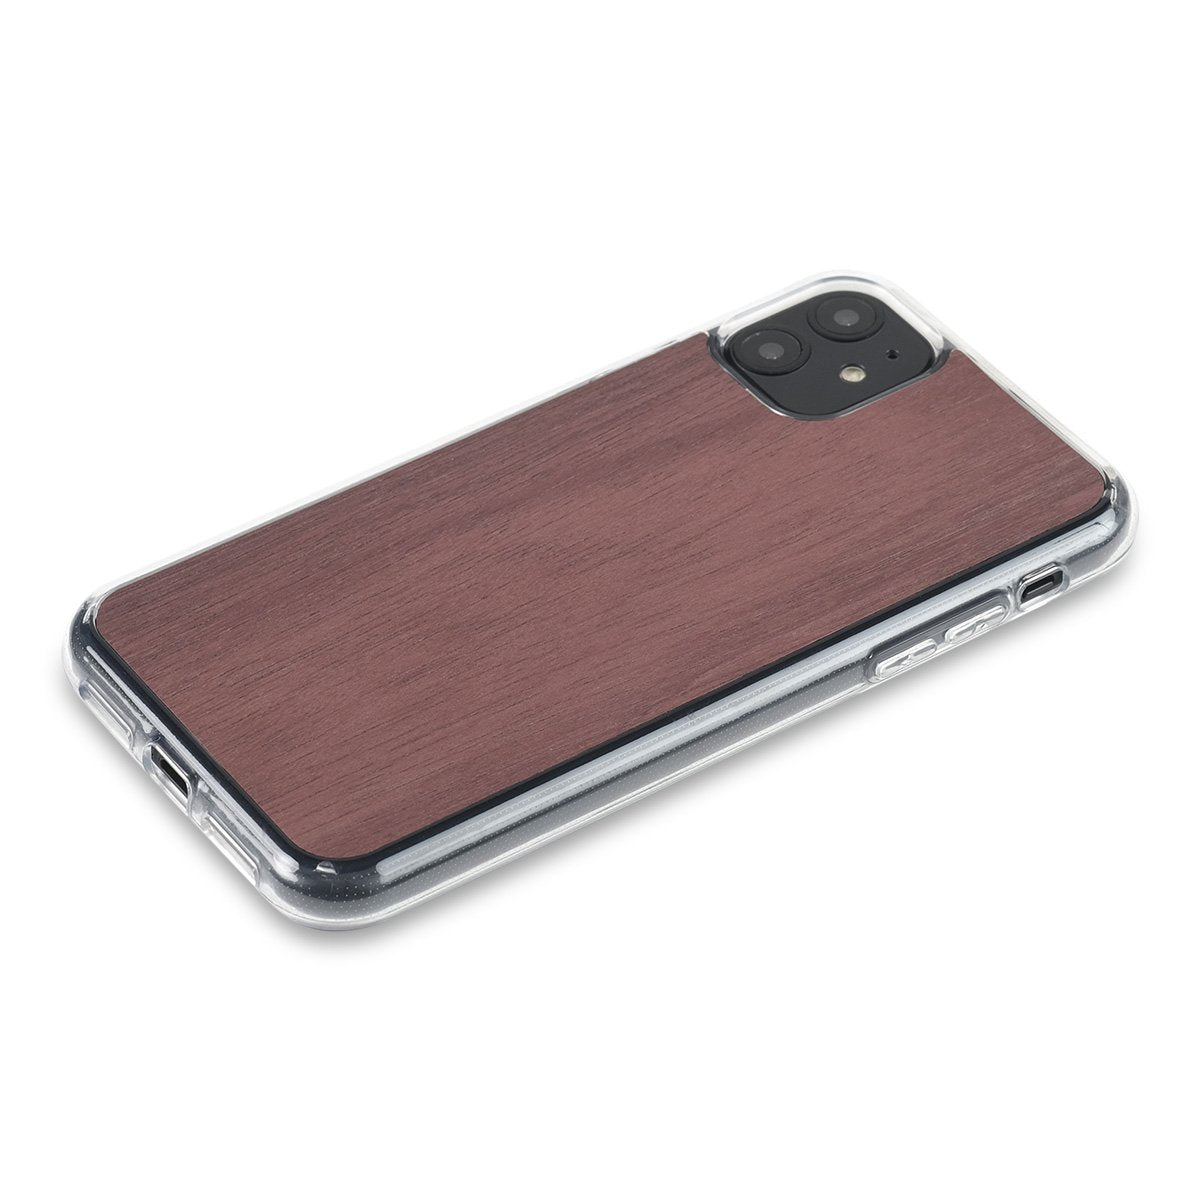 iPhone 11 Pro —  #WoodBack Explorer Clear Case